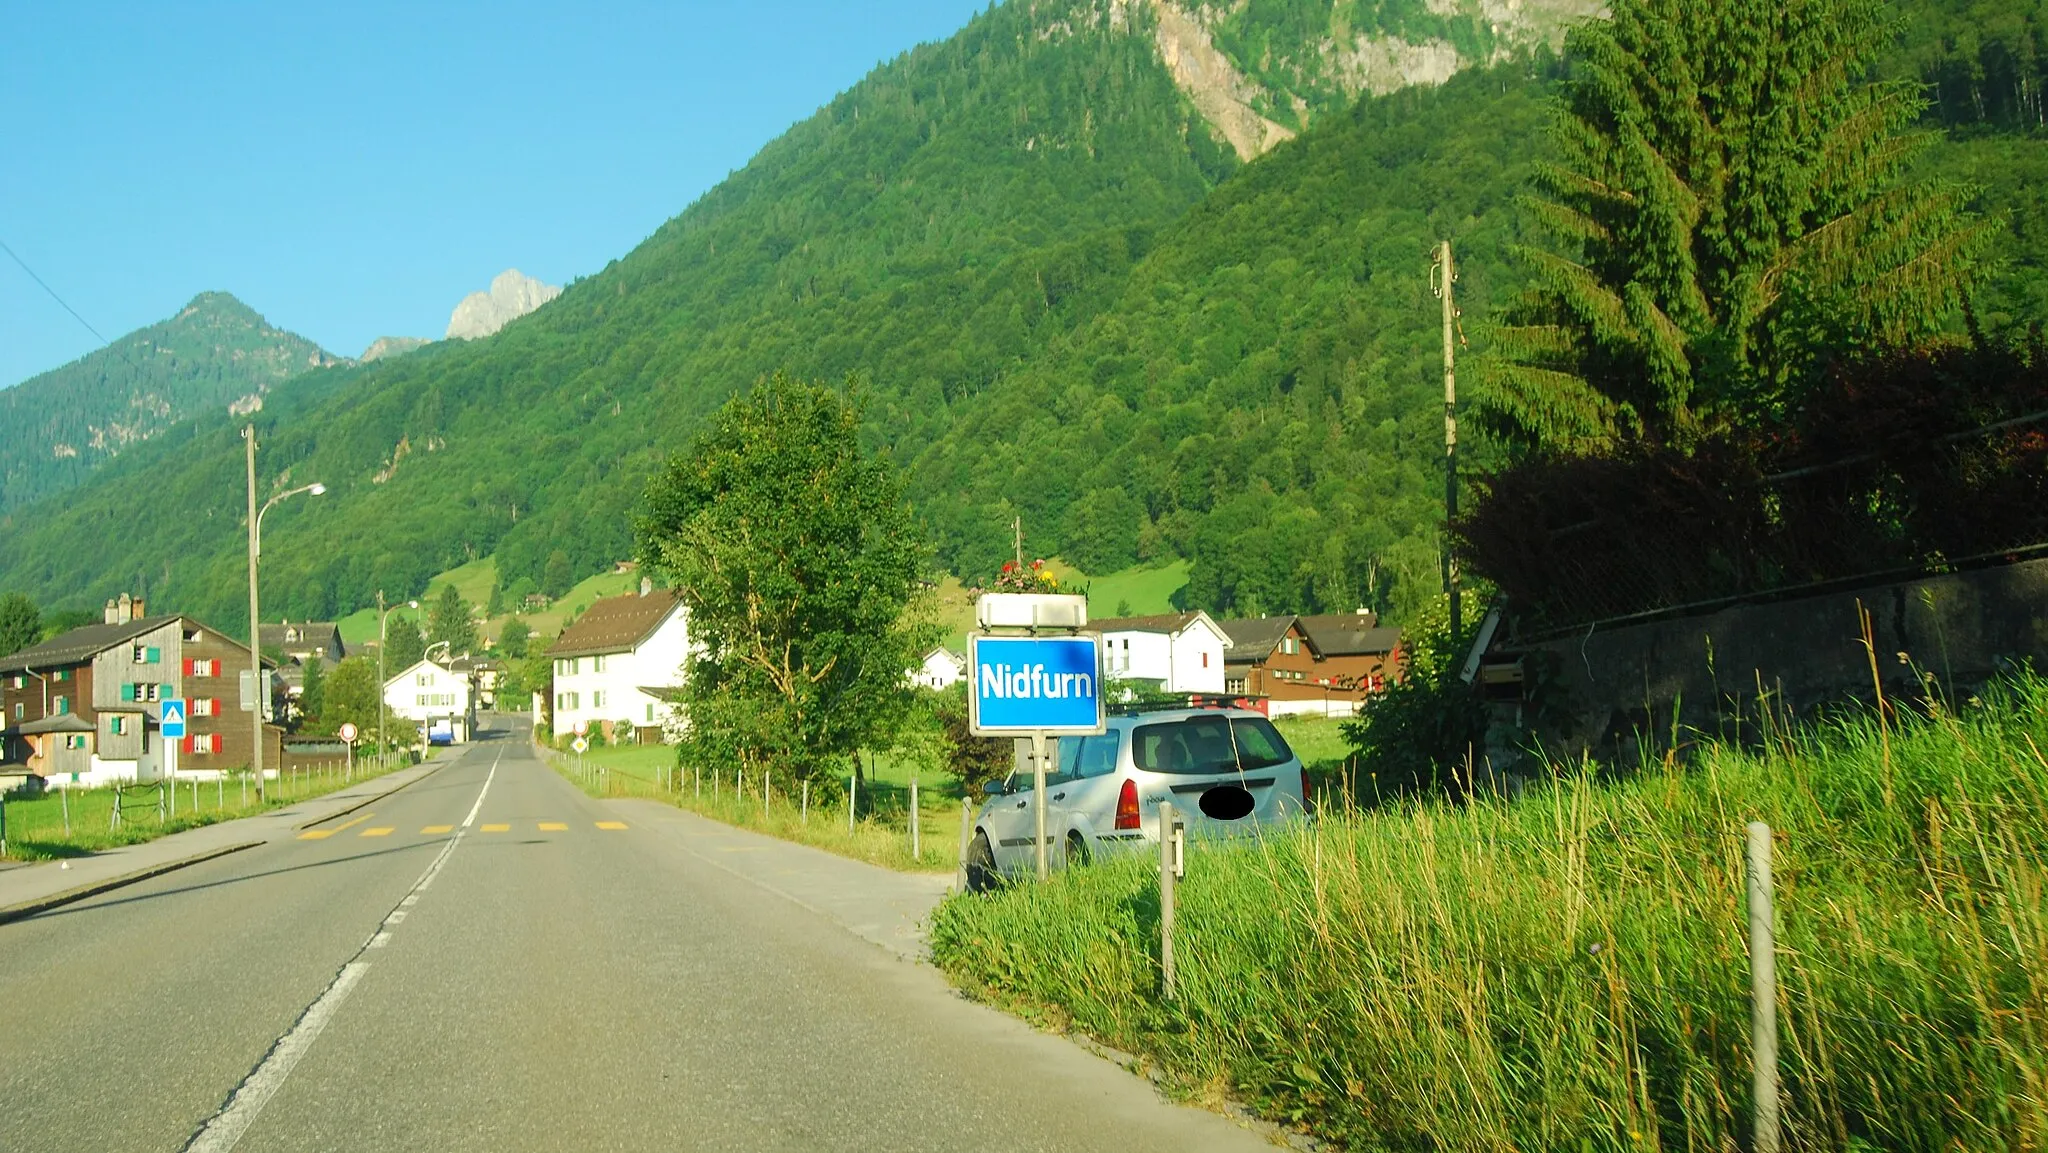 Photo showing: Village entry of Nidfurn, canton of Glarus, Switzerland